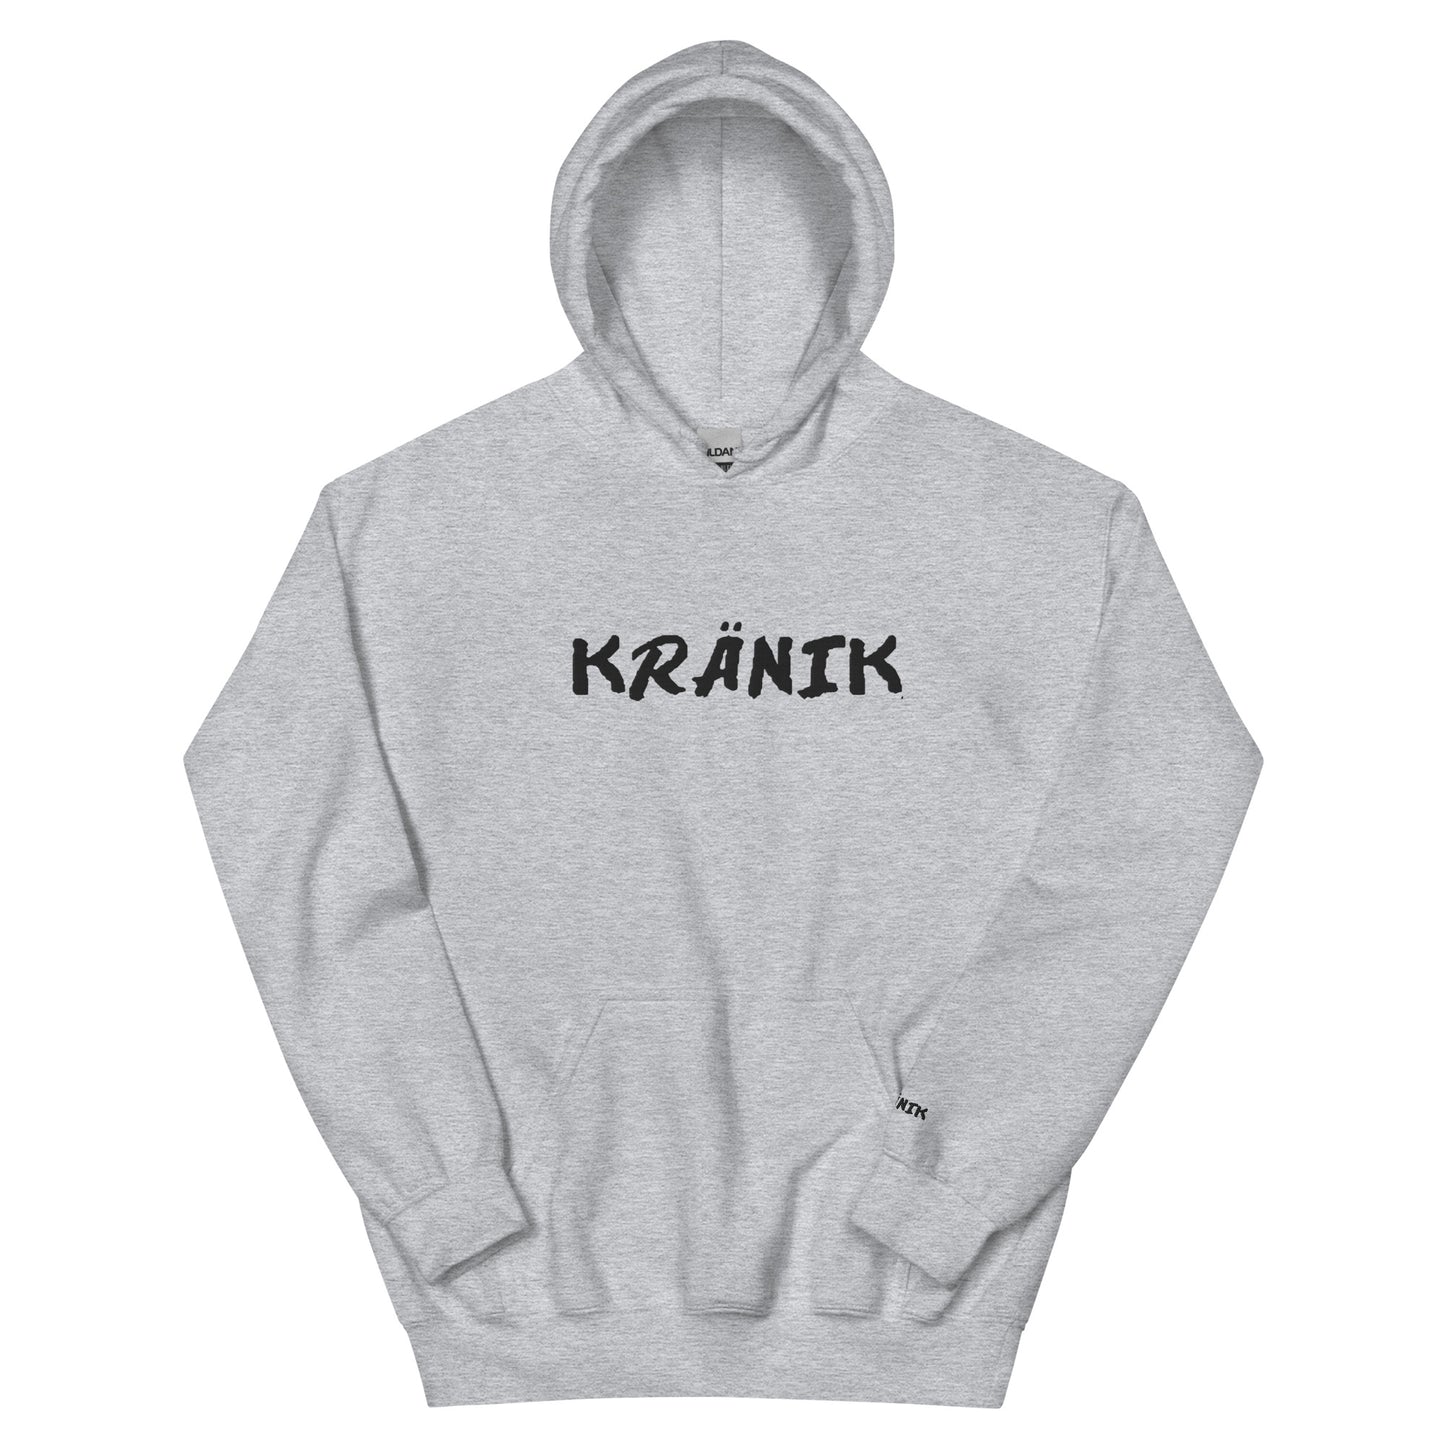 Kranik Brand / Hoodie / OG Dare Logo / Embroidered / White